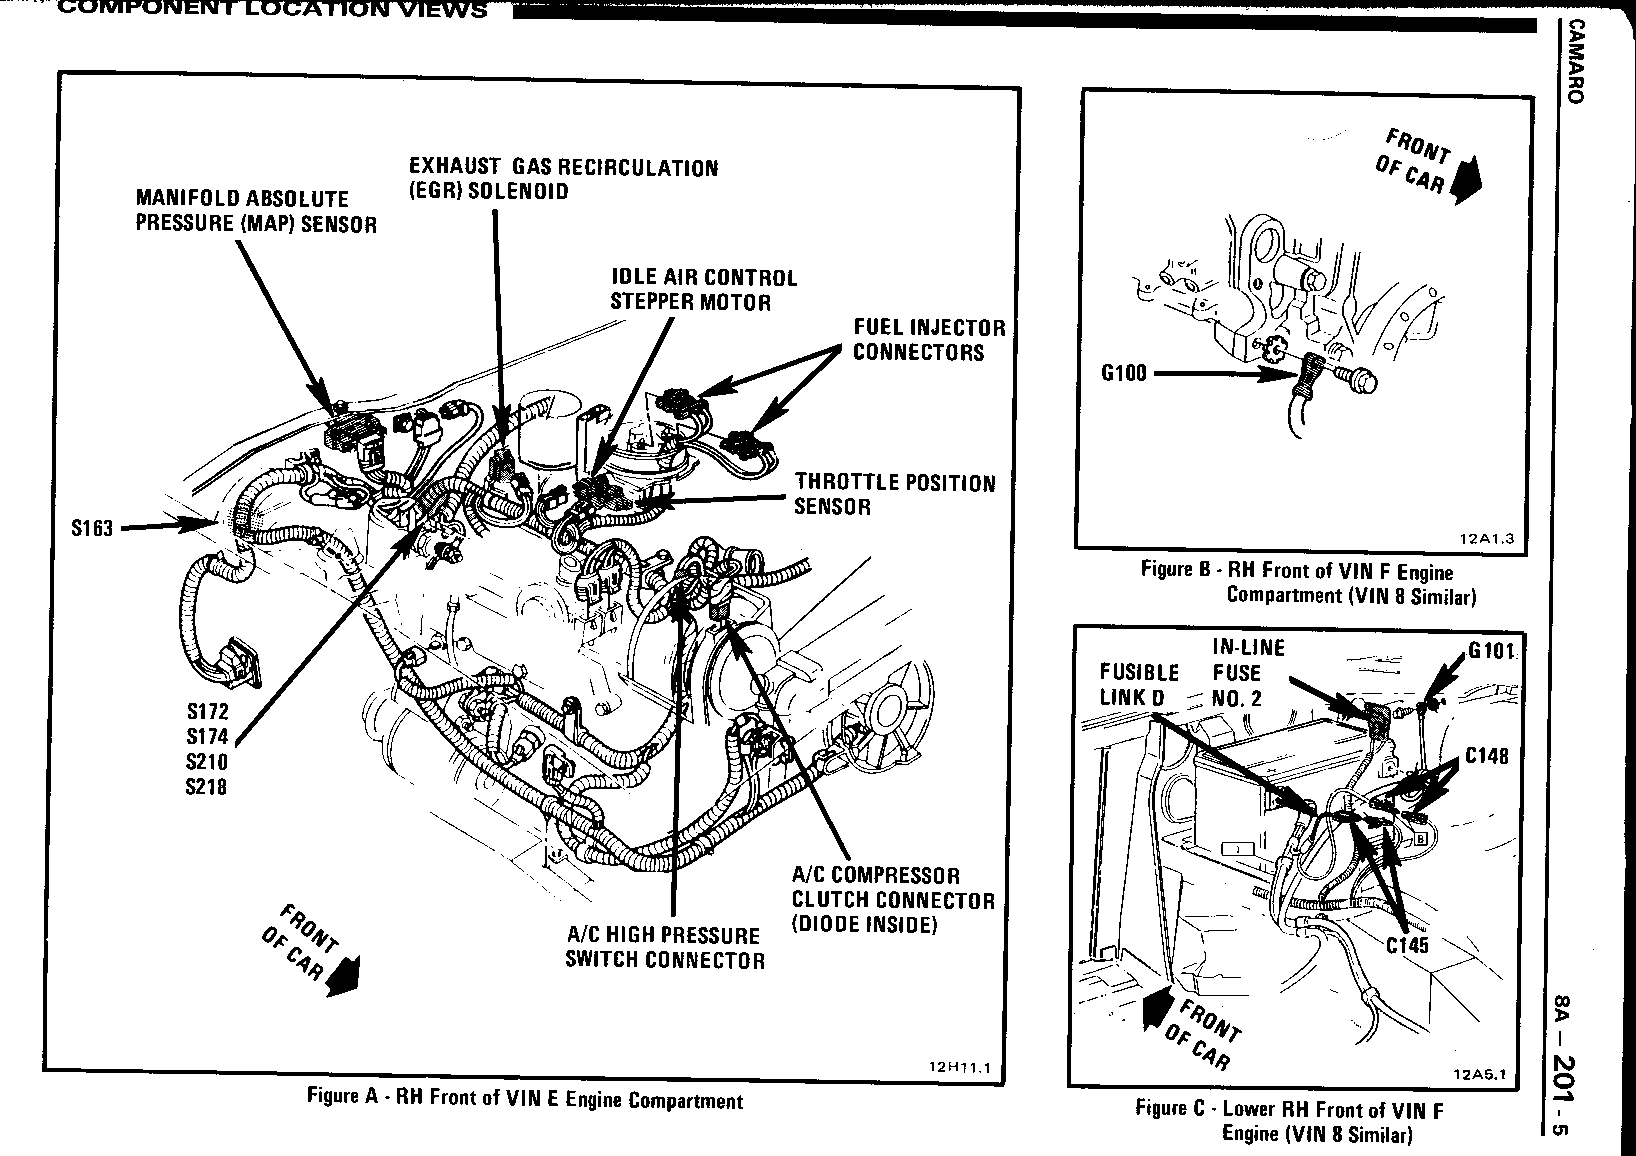 wiring diagram 1985 iroc